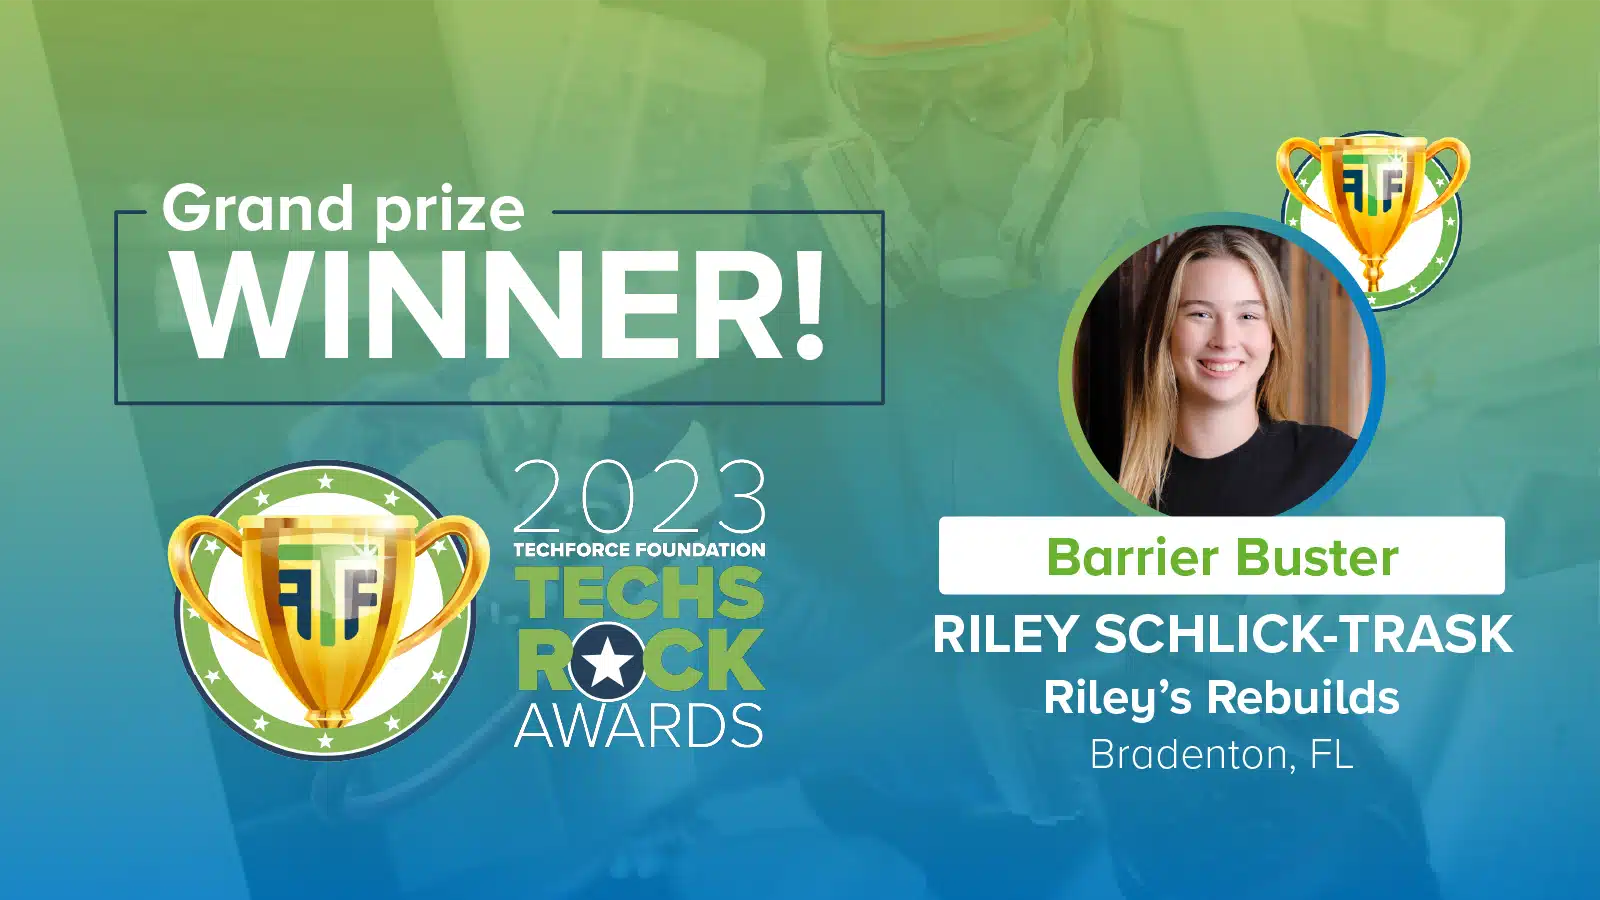 Congratulations to 2023 Techs Rock Awards Grand Prize Winner Riley Schlick-Trask!